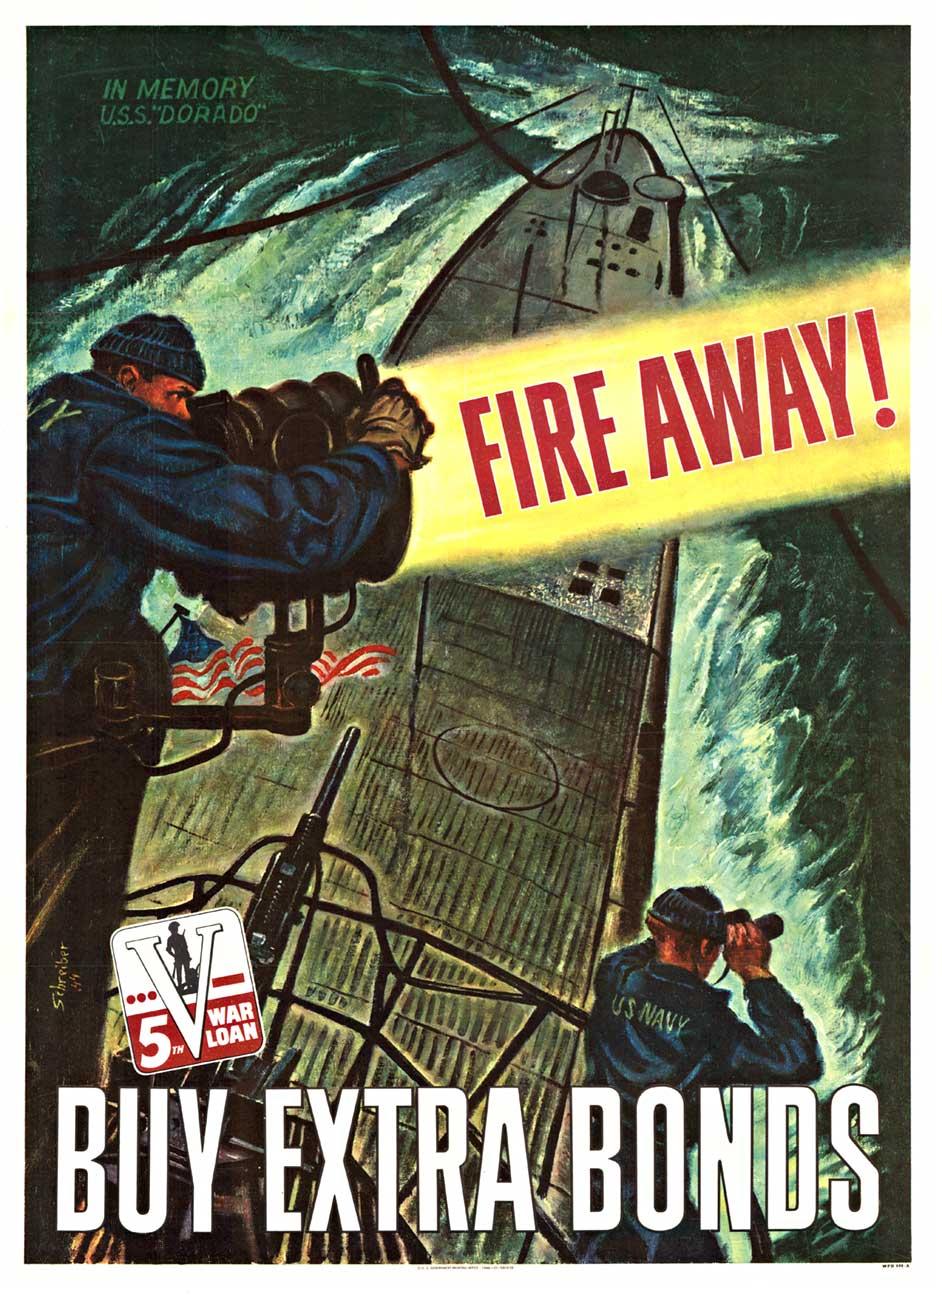 Georges Schreiber Landscape Print - Original "Fire Away! Buy Extra Bonds, 5th War Loan" vintage submarine poster.